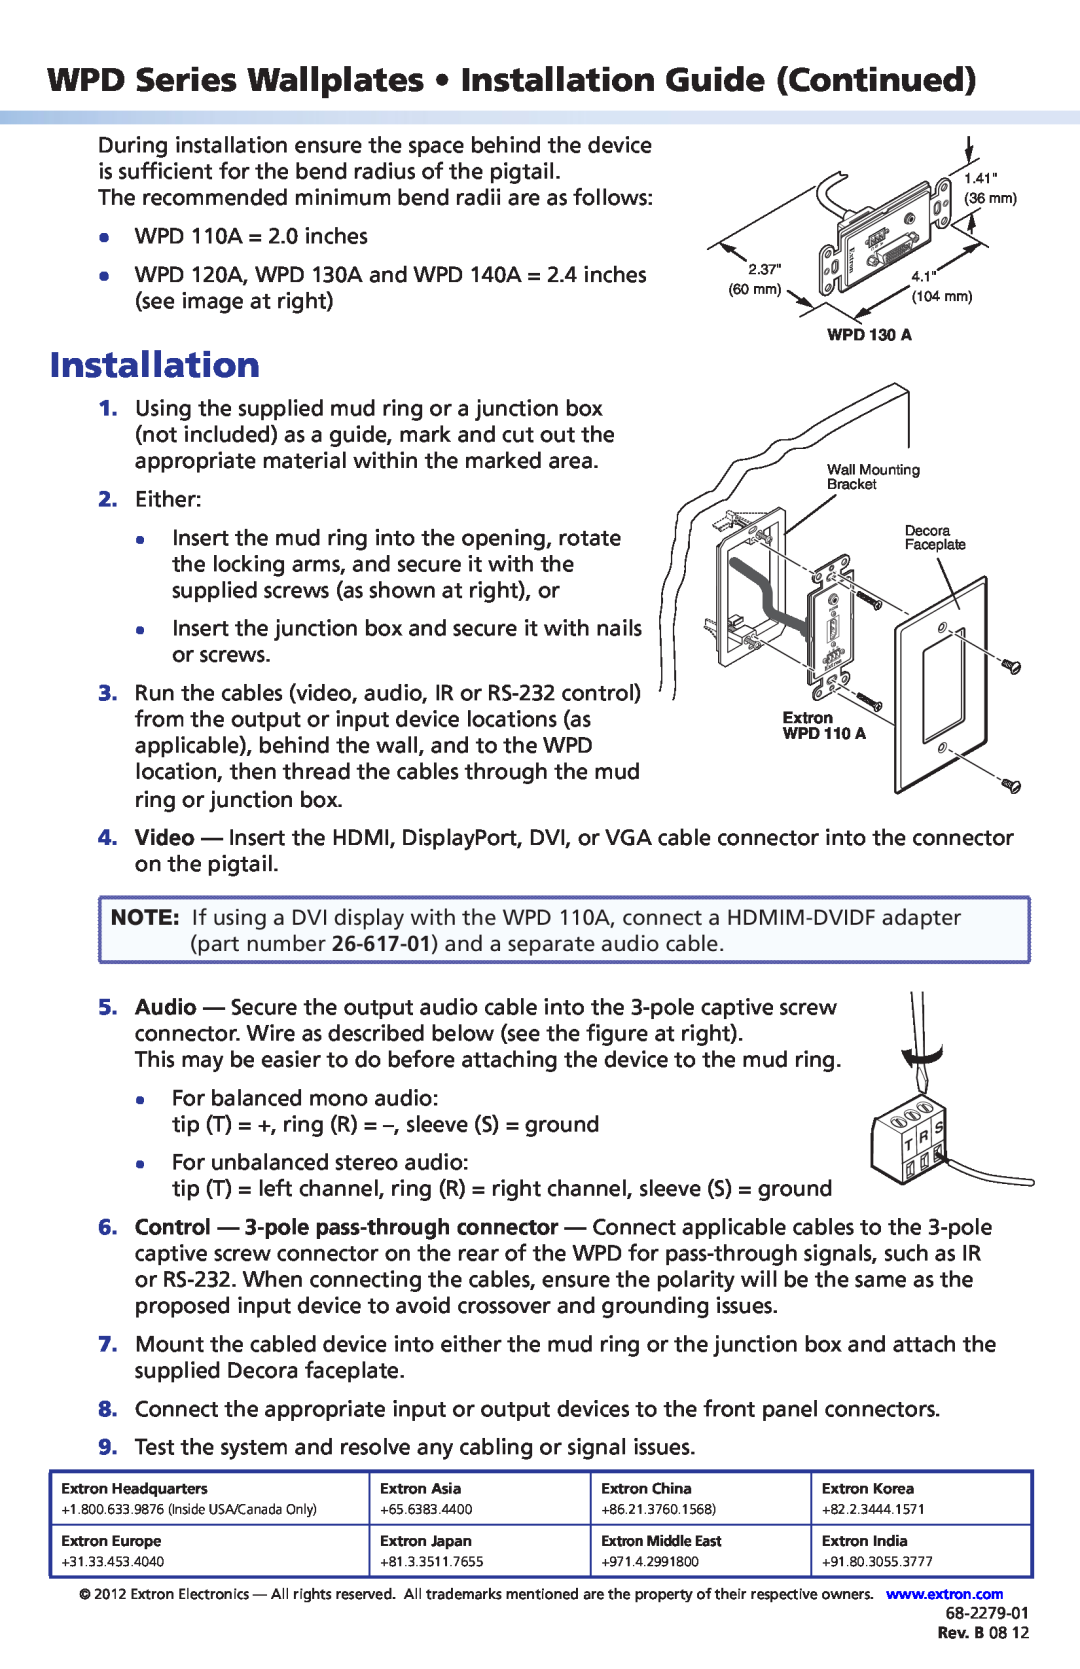 Extron electronic WPD 120 A, WPD 130 A, WPD 140 A, WPD 110 A manual Installation 